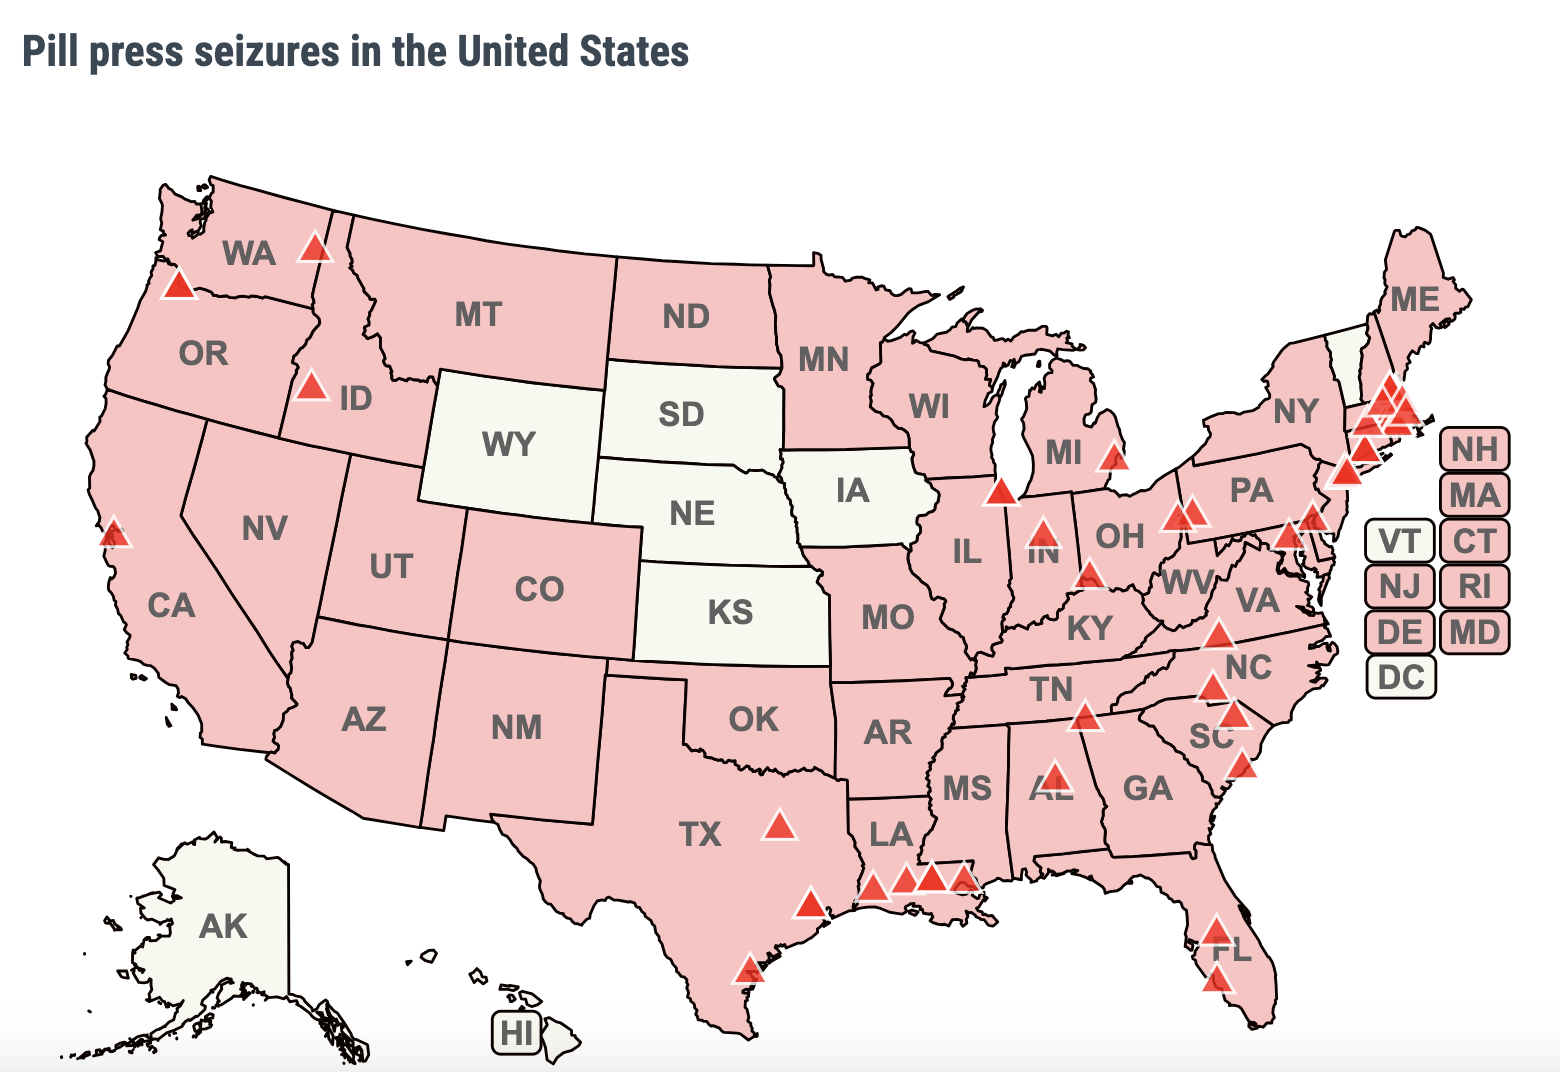 Map showing pill press seizures across the U.S. Only Wyoming, South Dakota, Nebraska, Kansas, Iowa, Alaska and Hawaii are unmarked